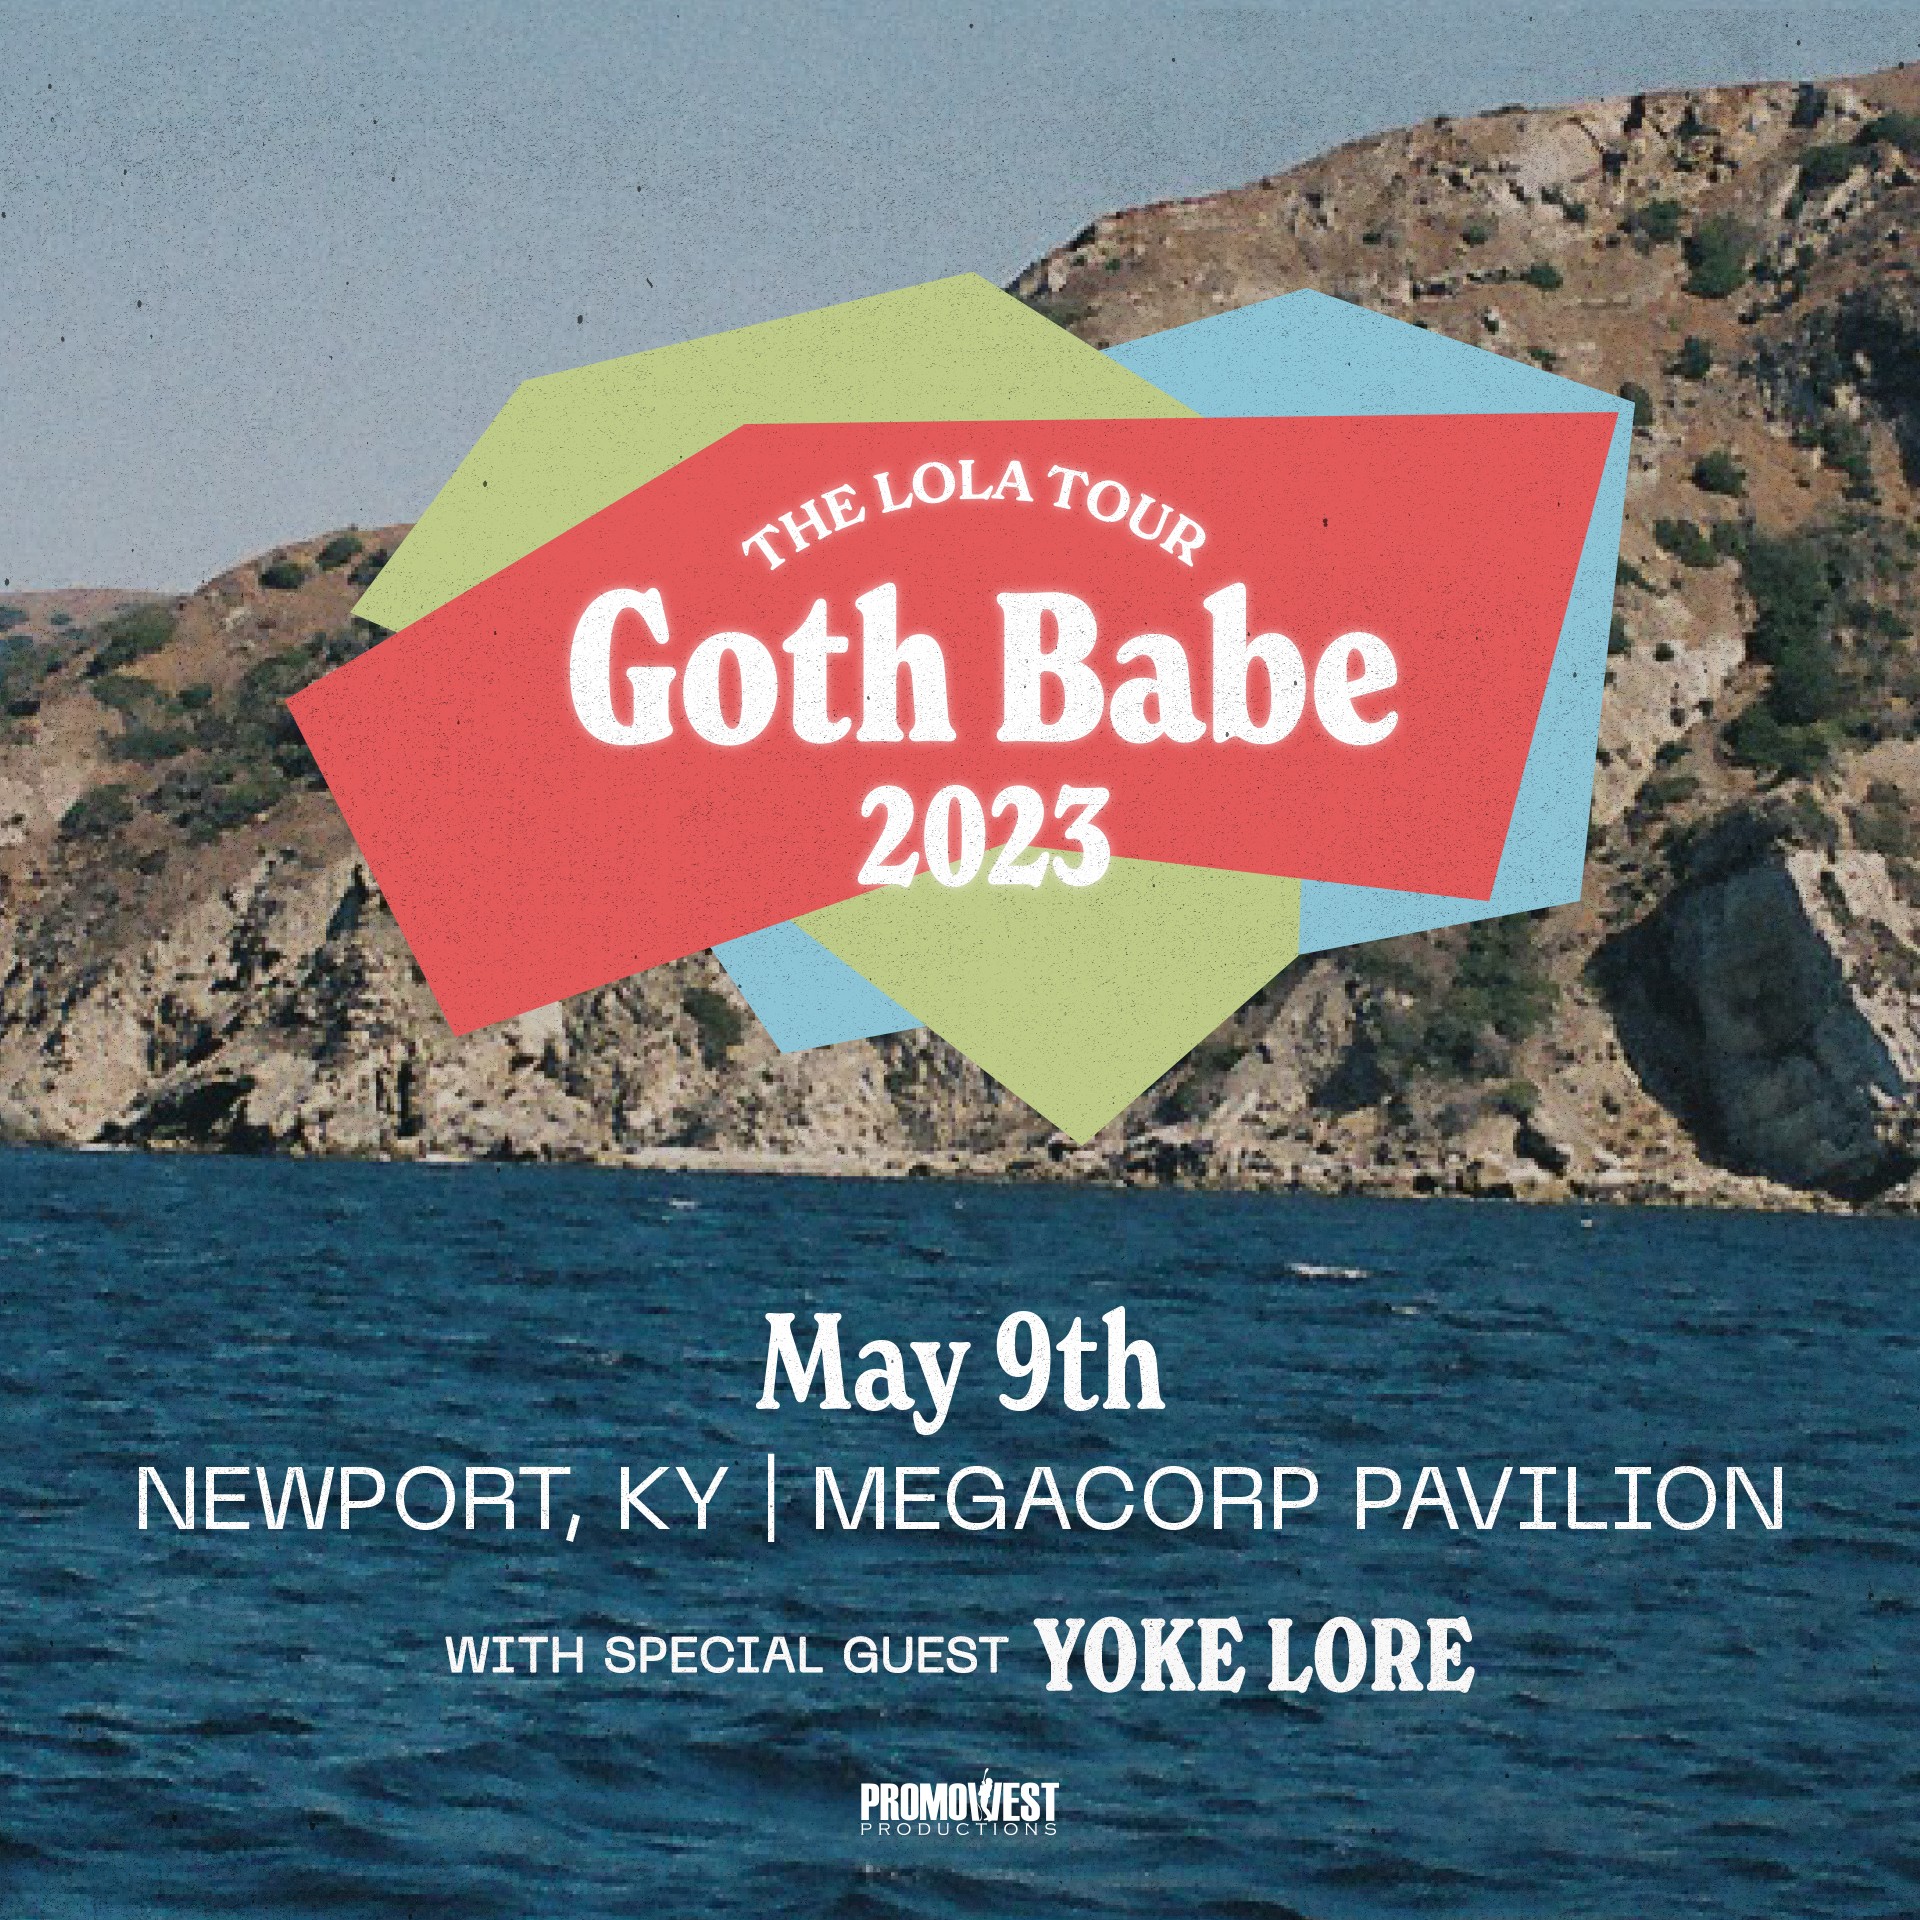 Goth Babe MegaCorp Pavilion Live Music Cincinnati CityBeat